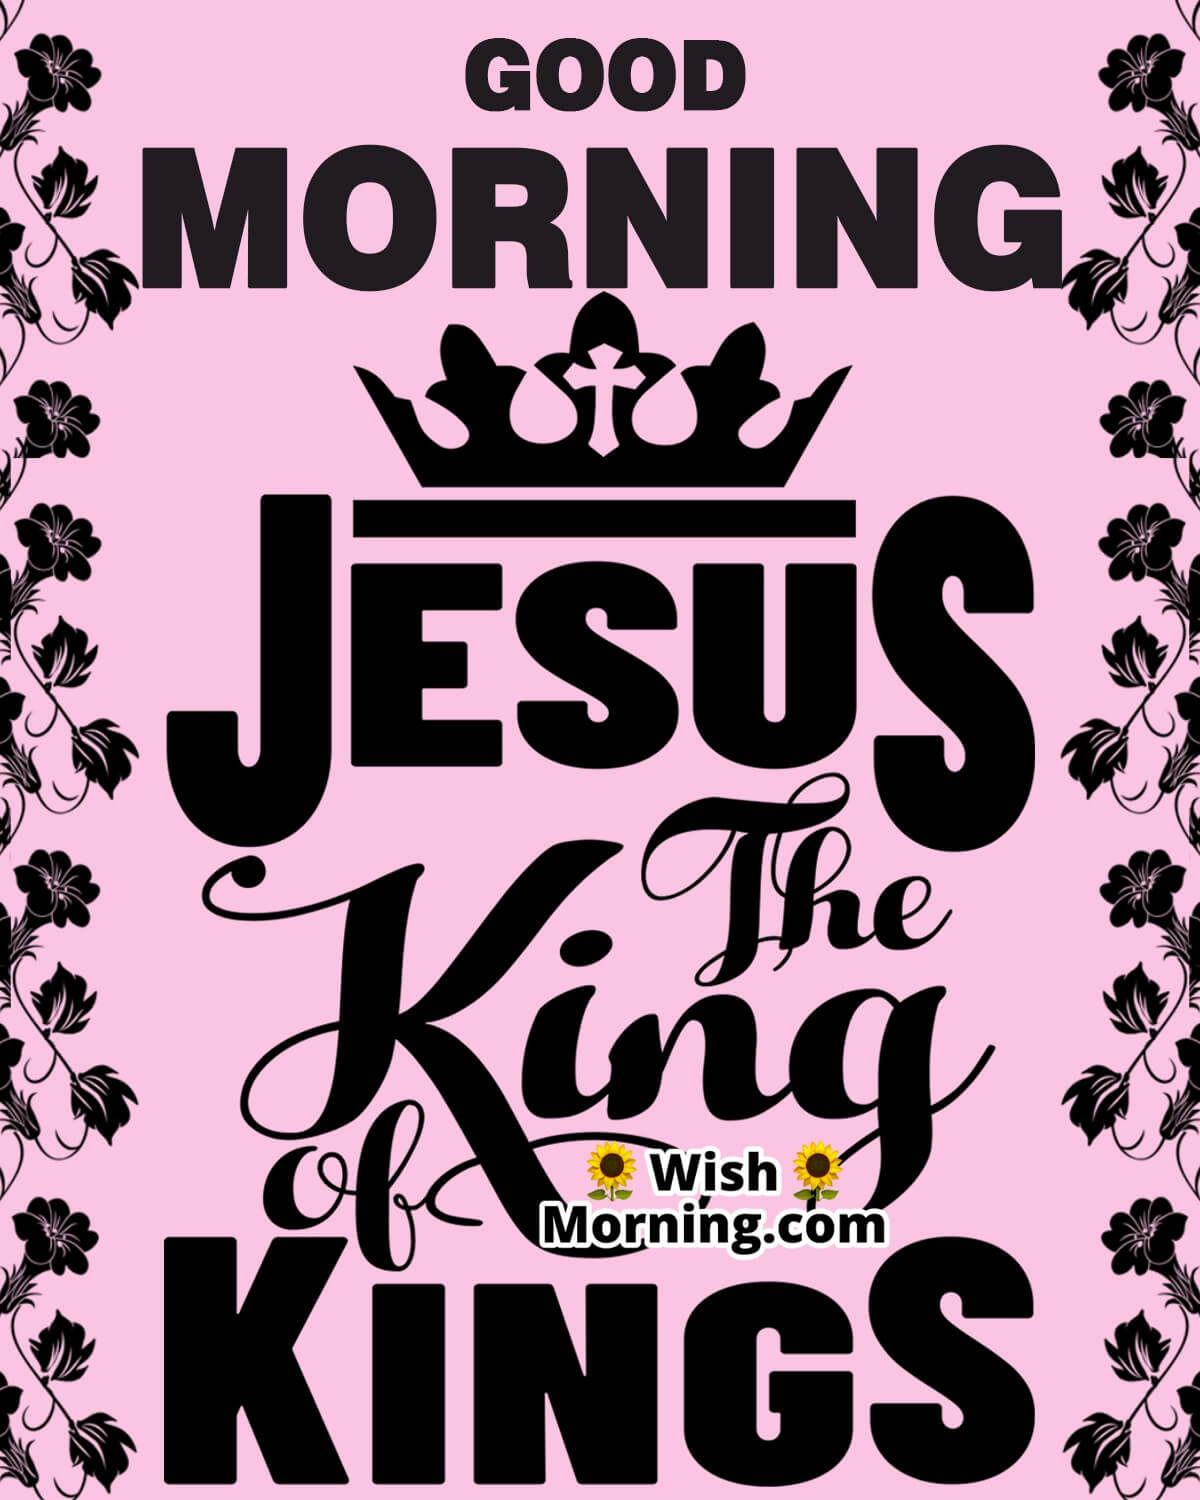 Good Morning Bible Verses - Wish Morning